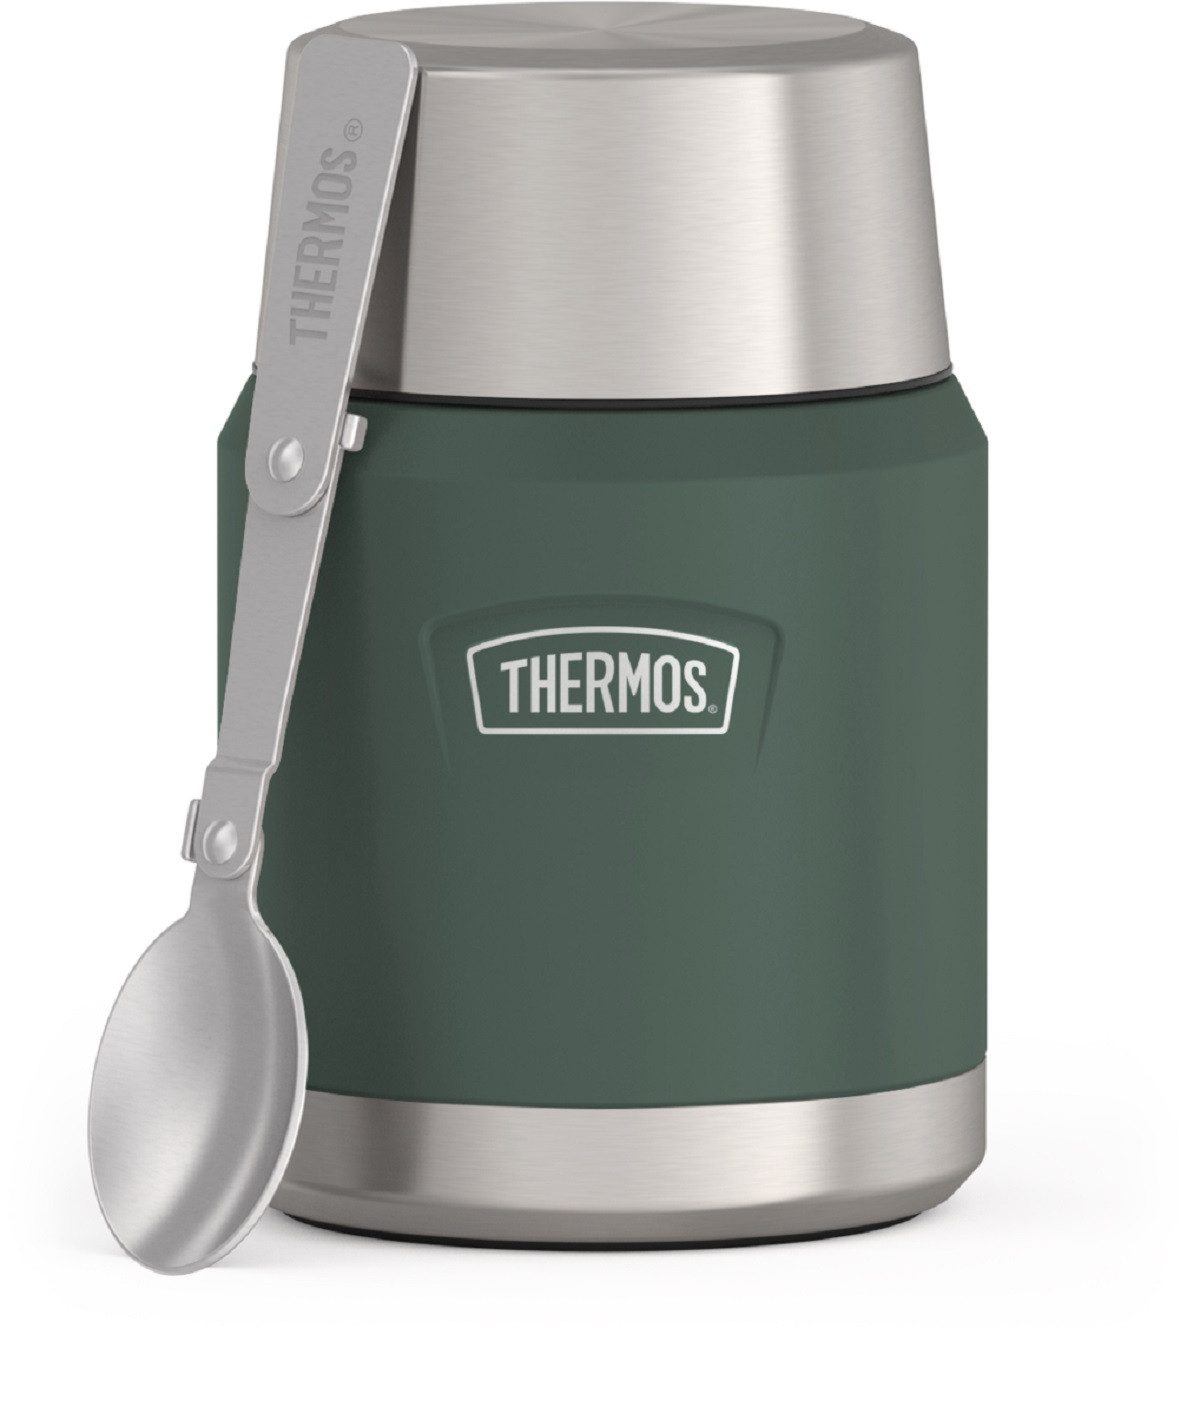 THERMOS Thermobehälter Thermos ICON Food Jar Forest matt, 0,47 Liter, Edelstahl, Silikon